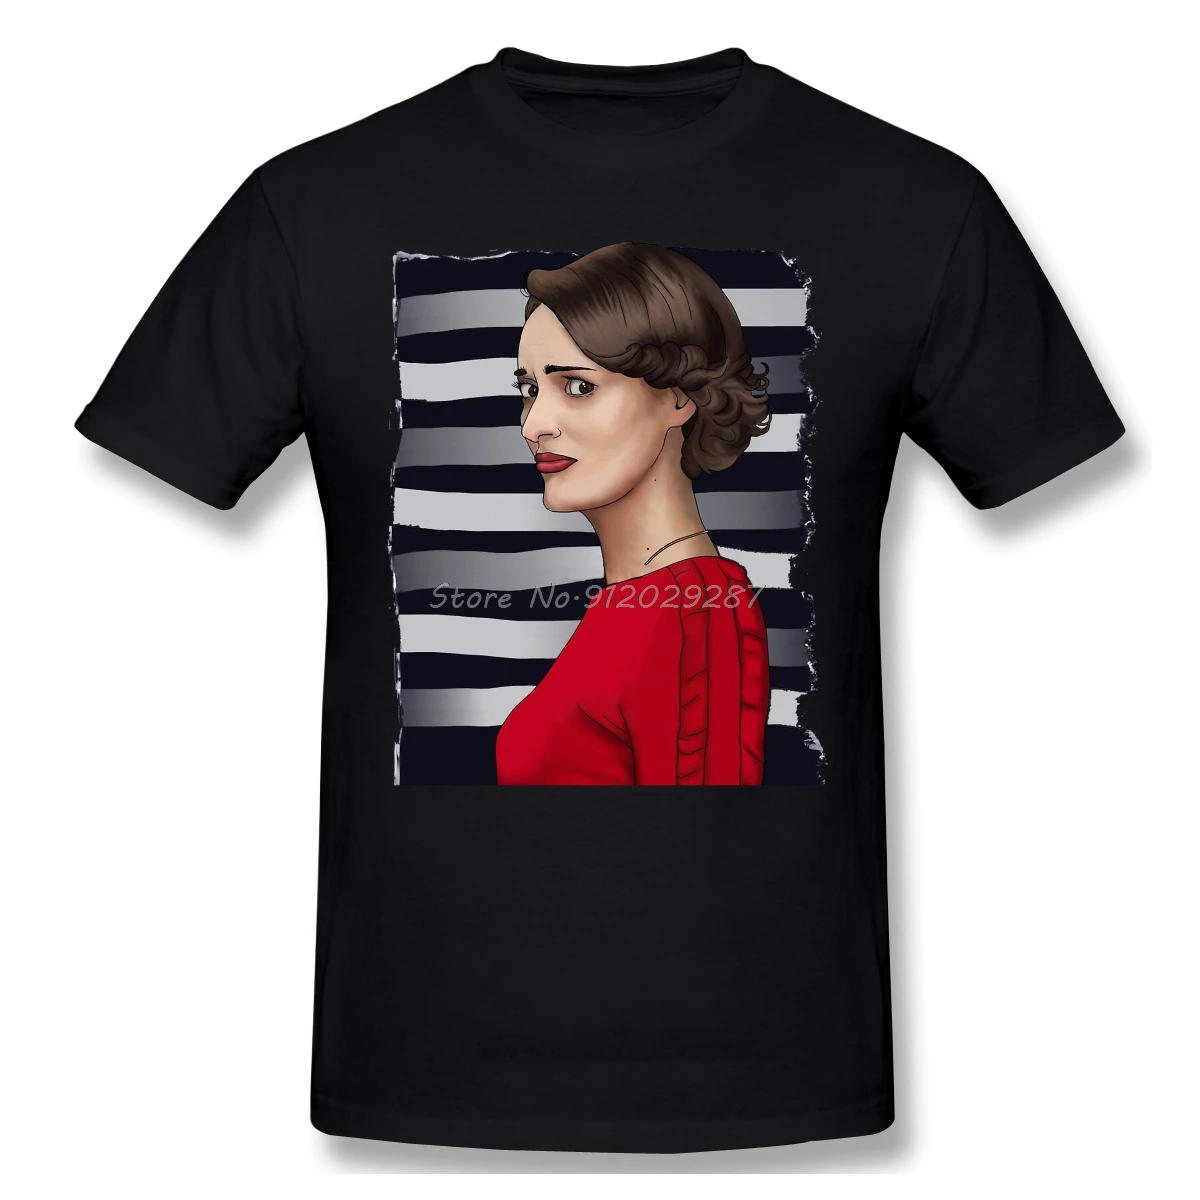 

Fashion Chatty Wednesdays Humor Shirt Design Comedy Fleabag British TV Series TShirt Cotton Camiseta Men T-Shirt